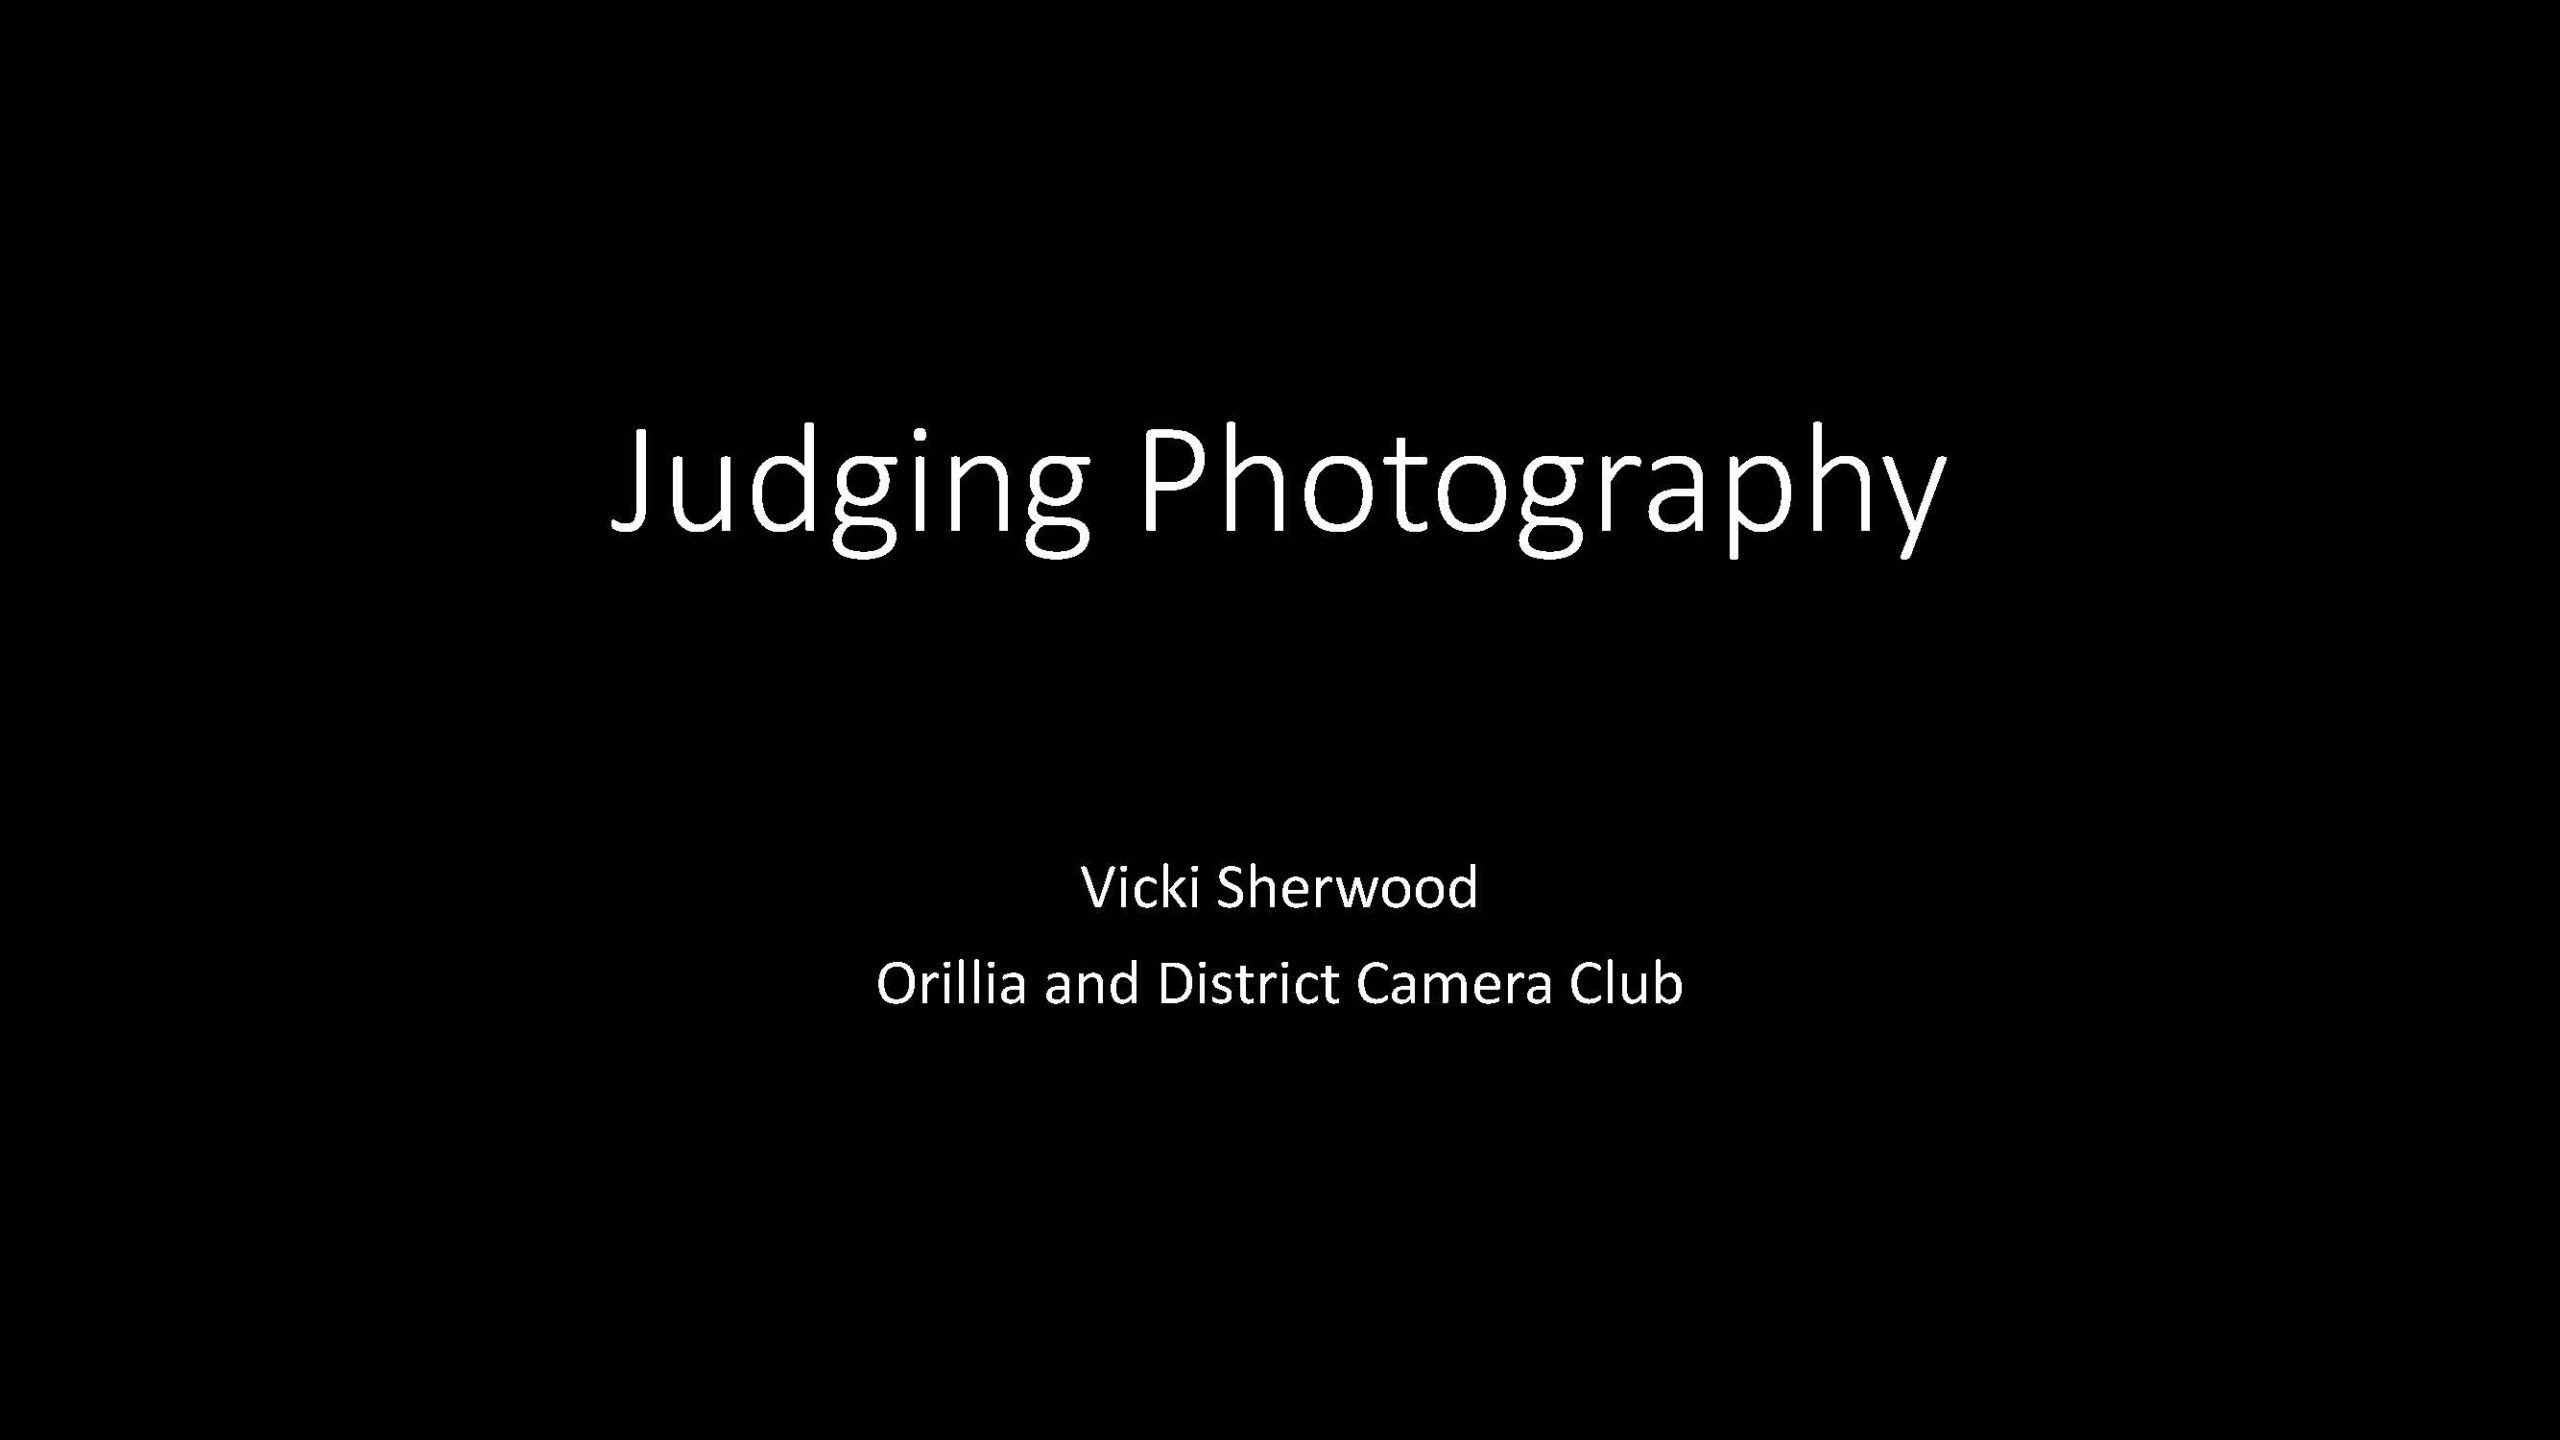 Judging Photography by Vicki Sherwood